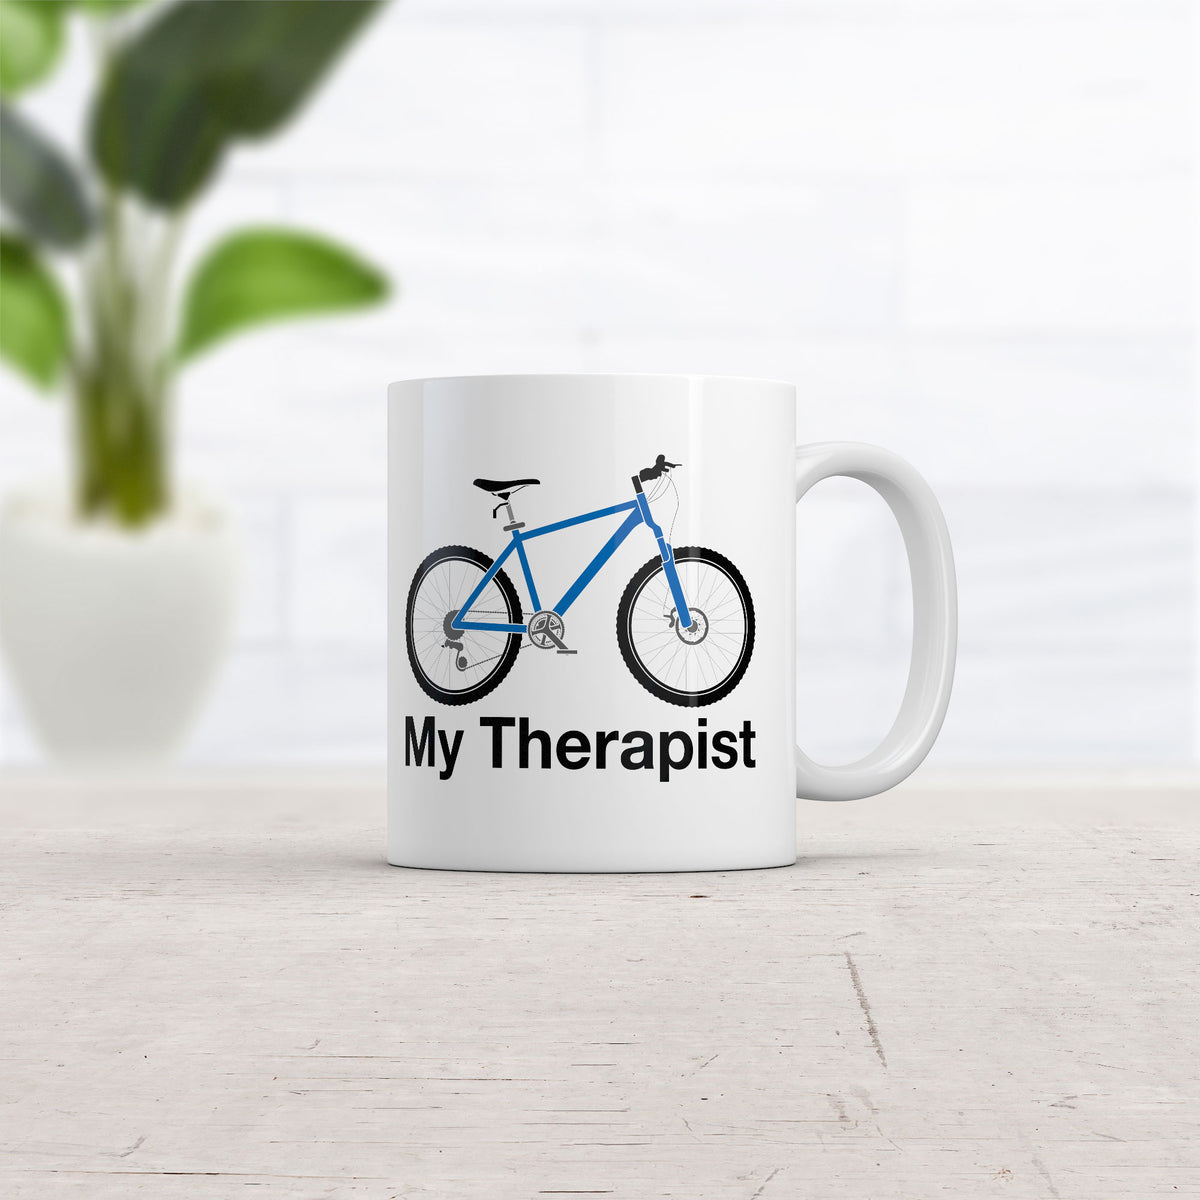 My Therapist Bicycle Mug